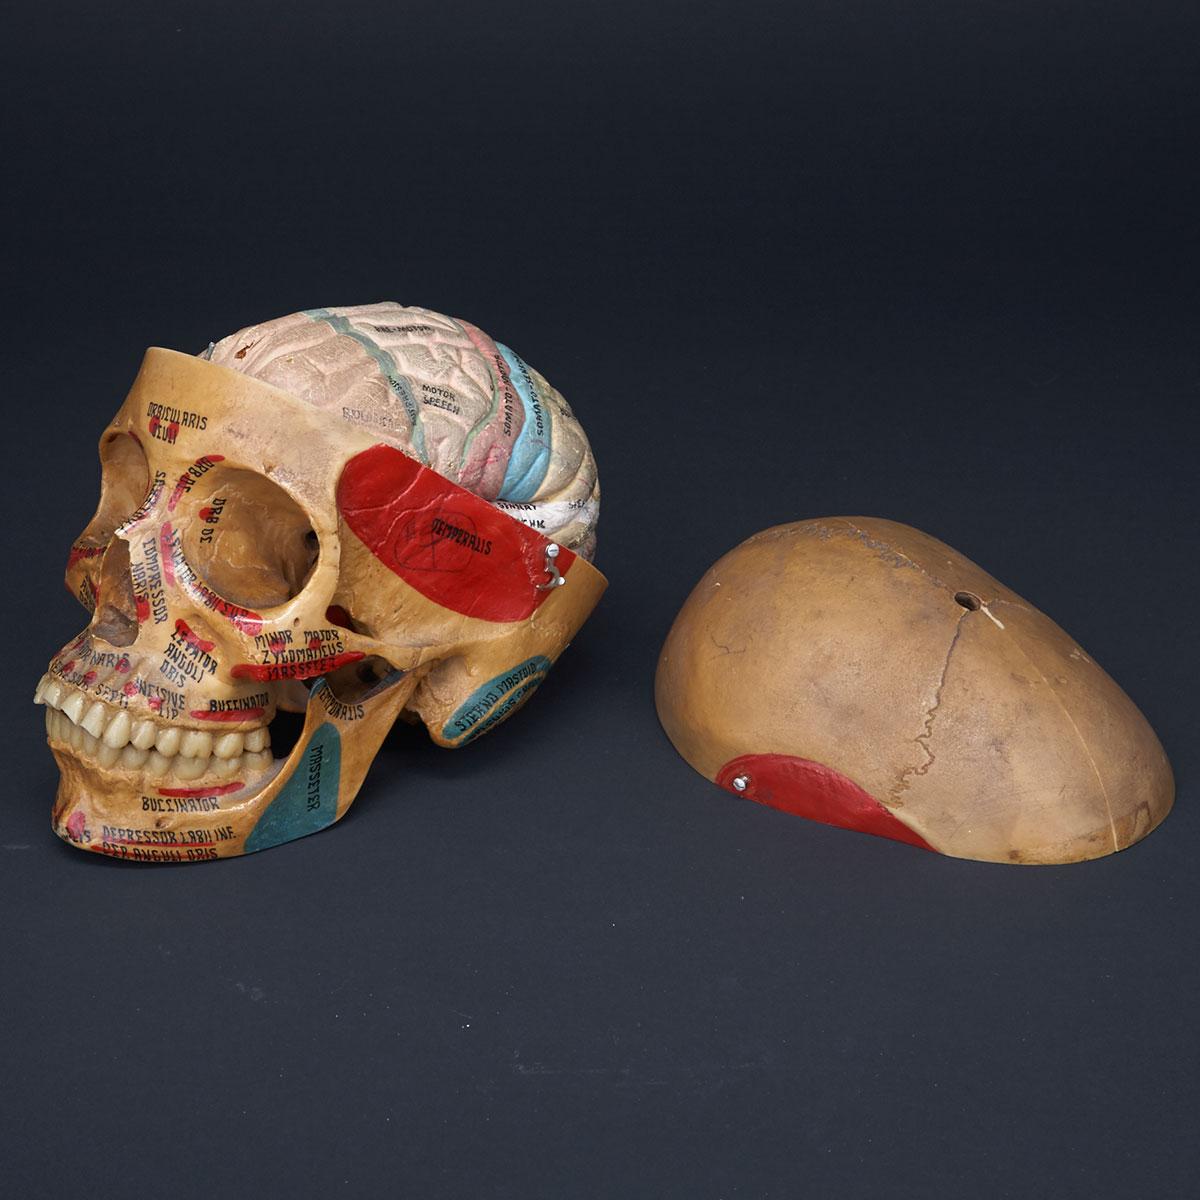 Polychromed Resin Anatomical Study Model of Human Skull, Medical Plastics Lab, Texas, mid 20th century